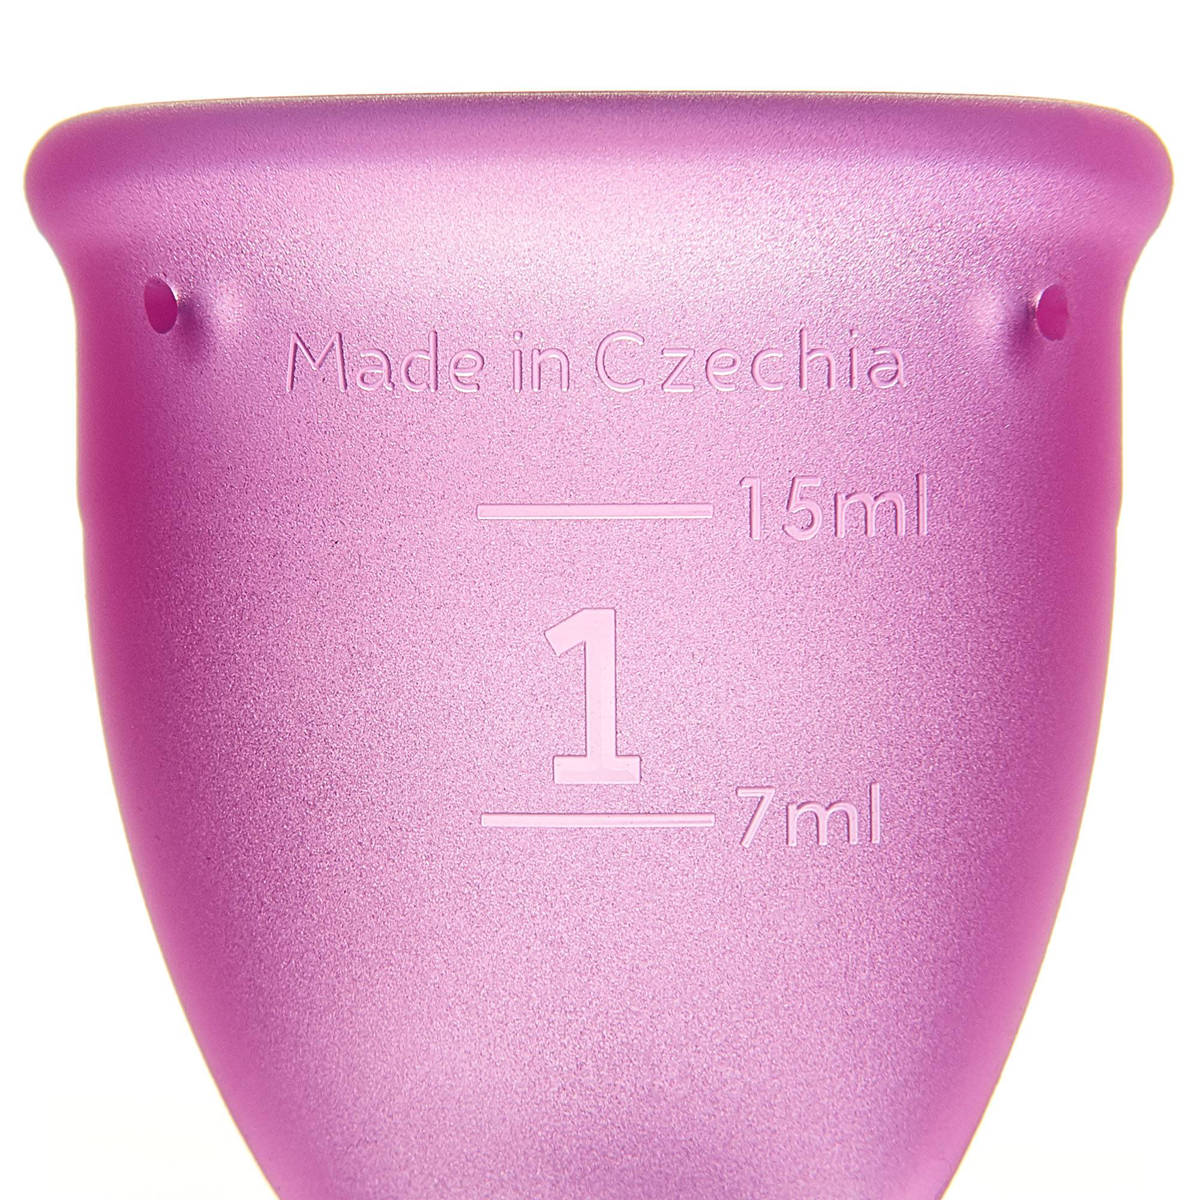 LUNACUP menstrual cup Reinforced edge 4 holes